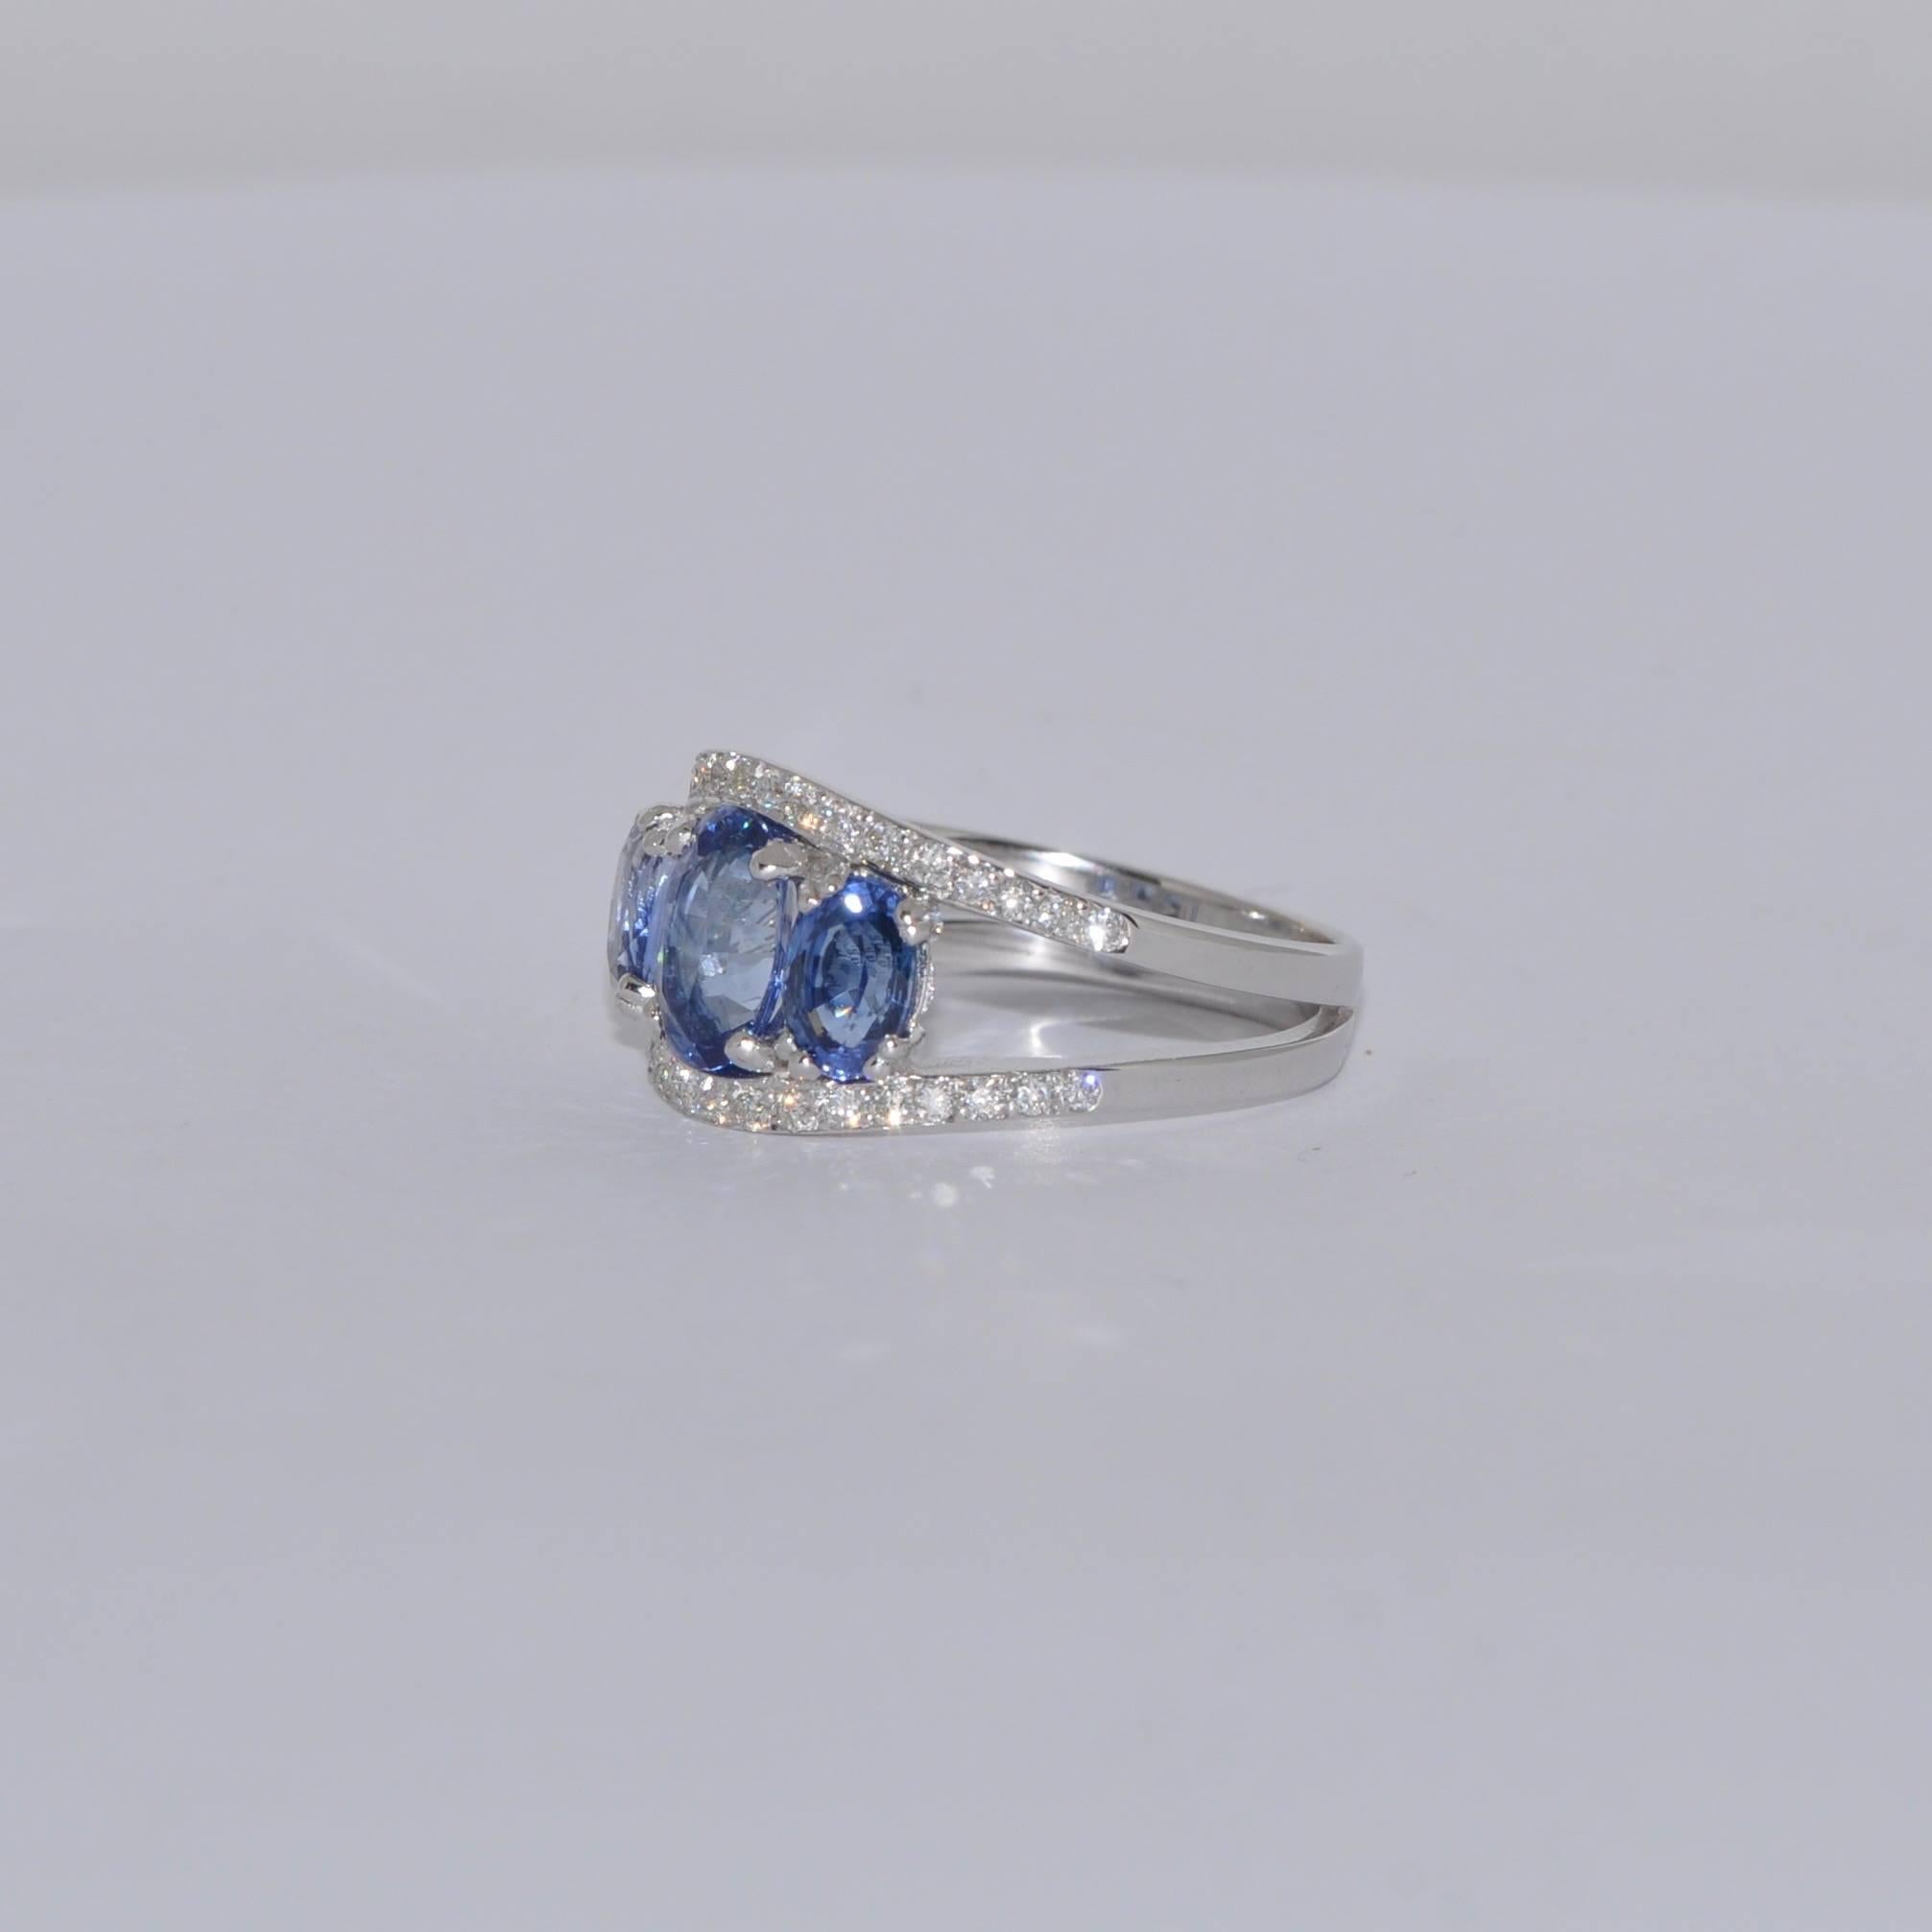 Blue Sapphires 3.0 Carat and White Diamonds White Gold Ring.
Blue Sapphires 3.0 Carat
White Diamonds 0.29 Carat
White Gold 18 Carat
French Size 53
US Size 7